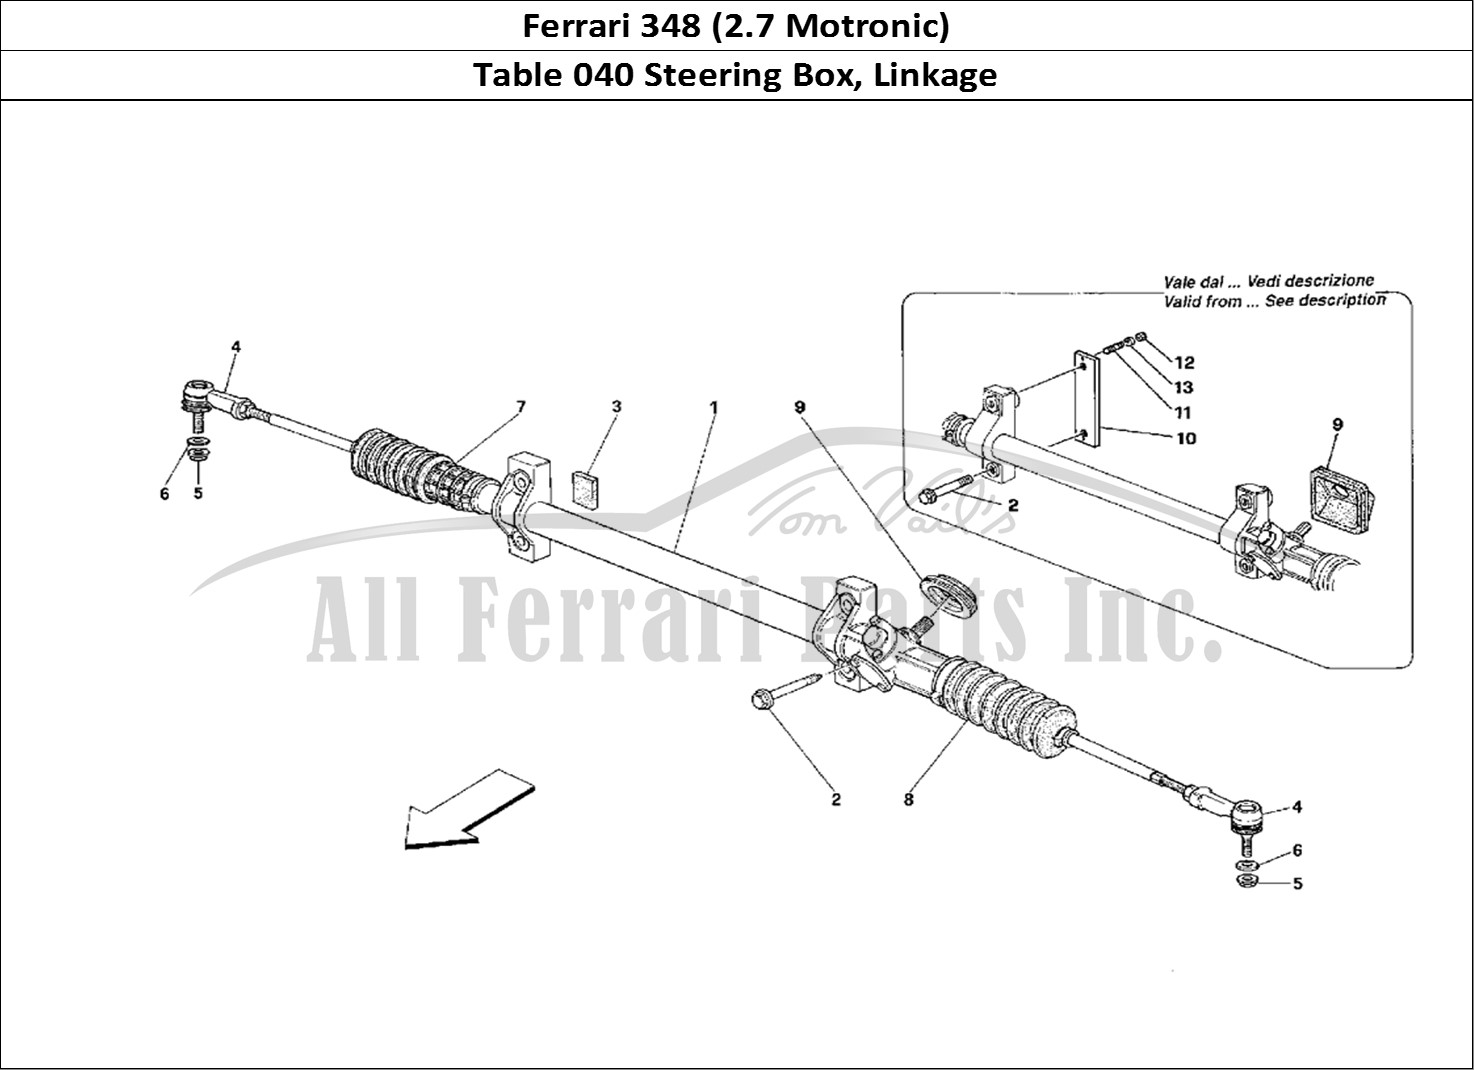 Ferrari Parts Ferrari 348 (2.7 Motronic) Page 040 Steering Box and Linkage